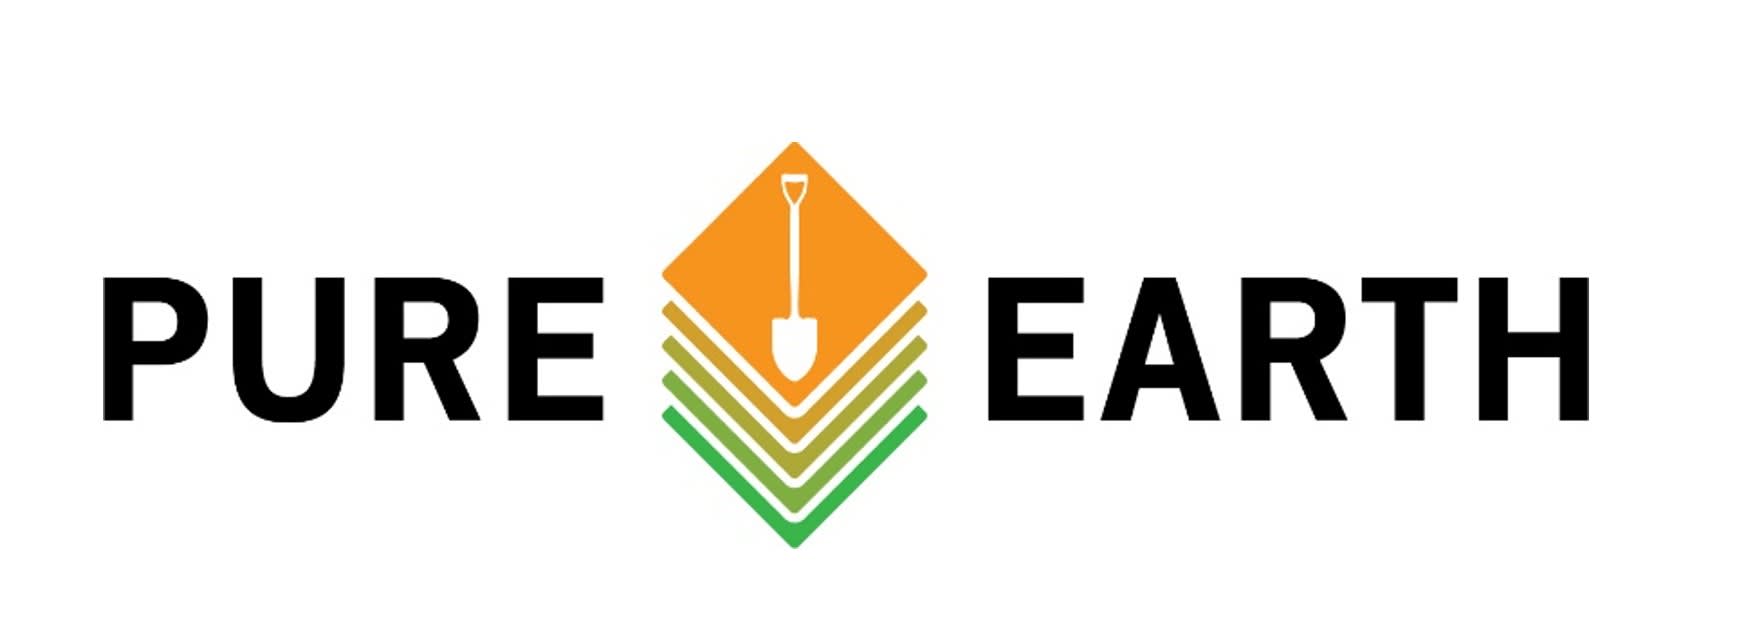 Pure Earth logo